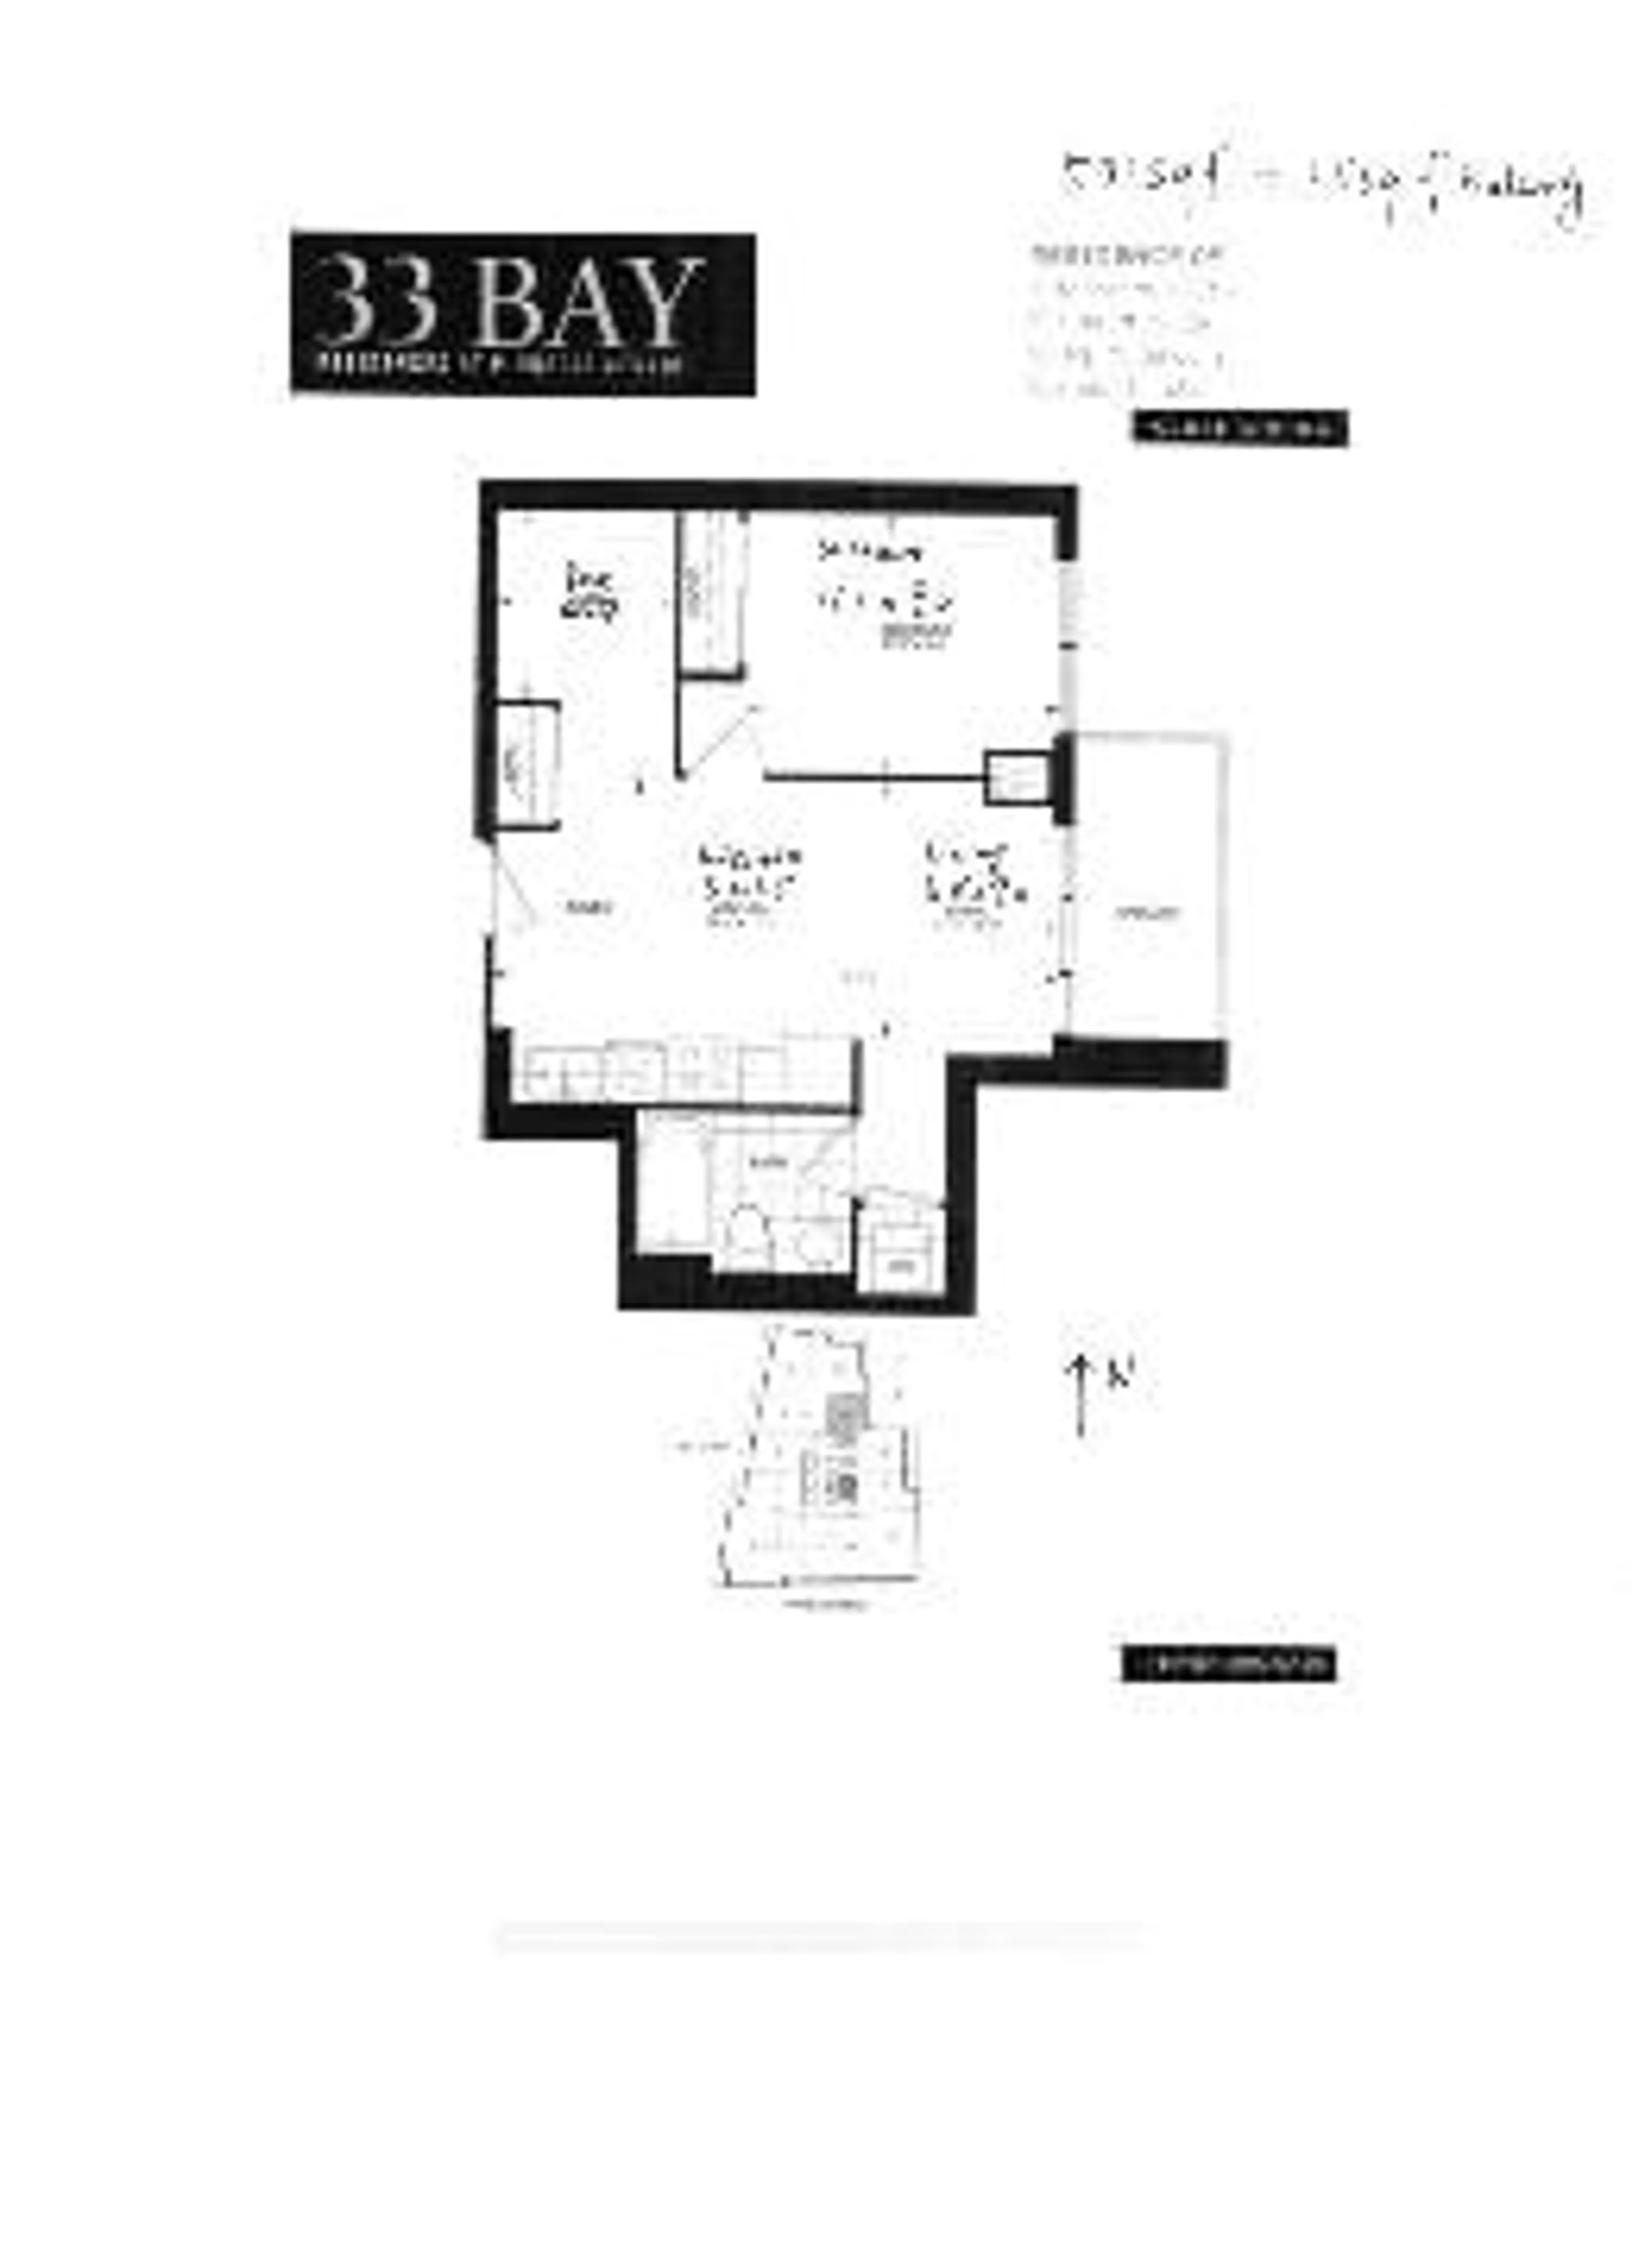 Floor plan for 33 Bay St #805, Toronto Ontario M5J 2Z3